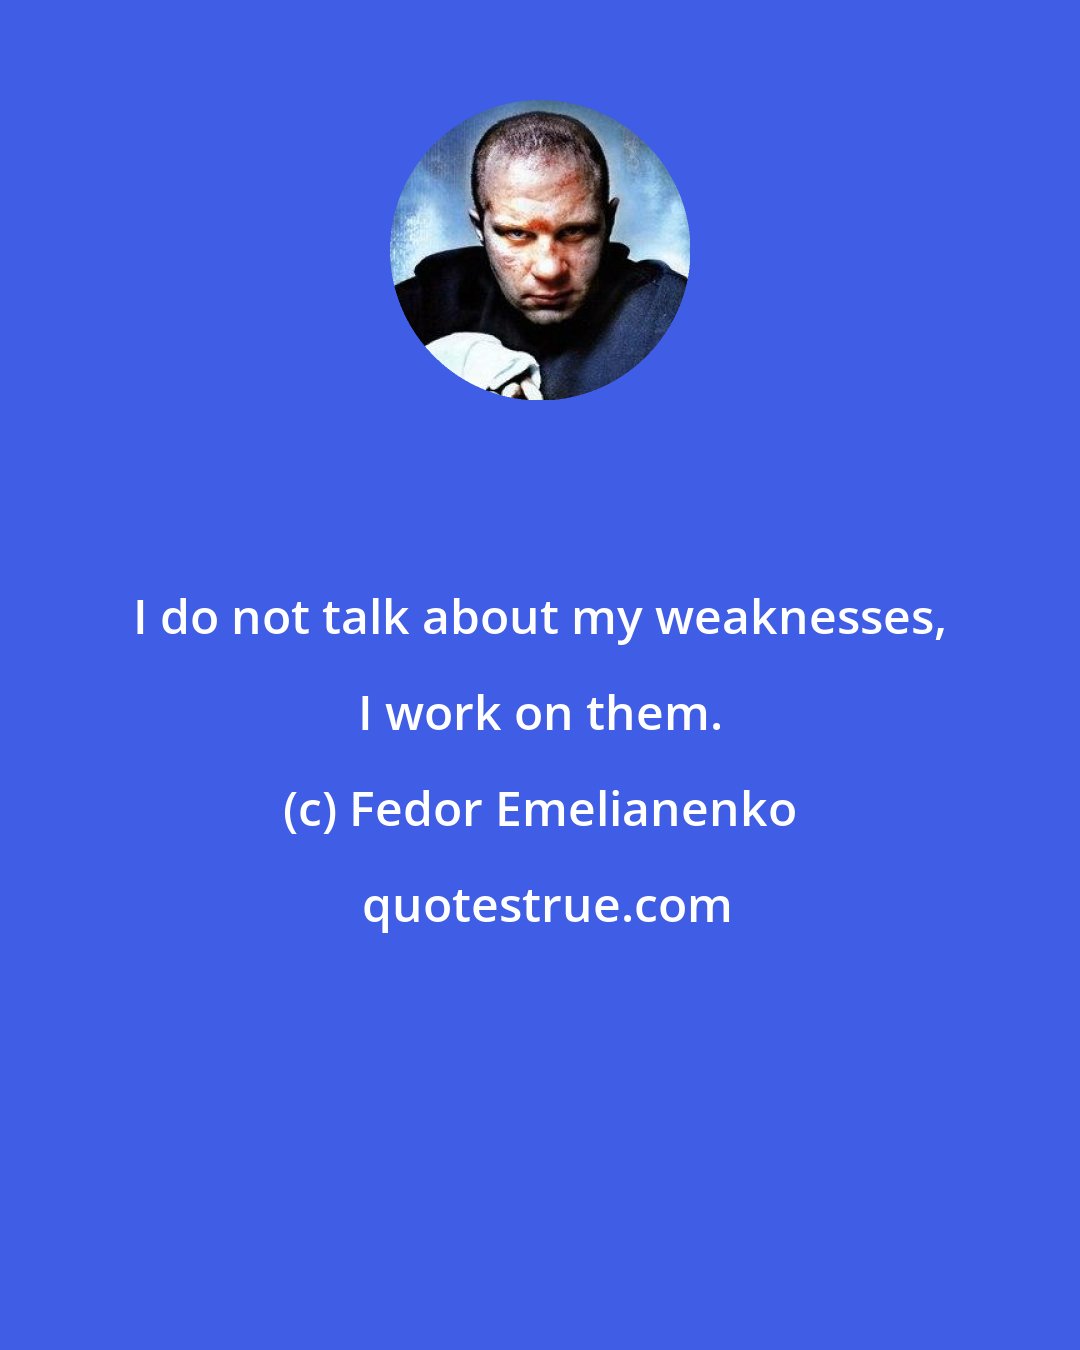 Fedor Emelianenko: I do not talk about my weaknesses, I work on them.